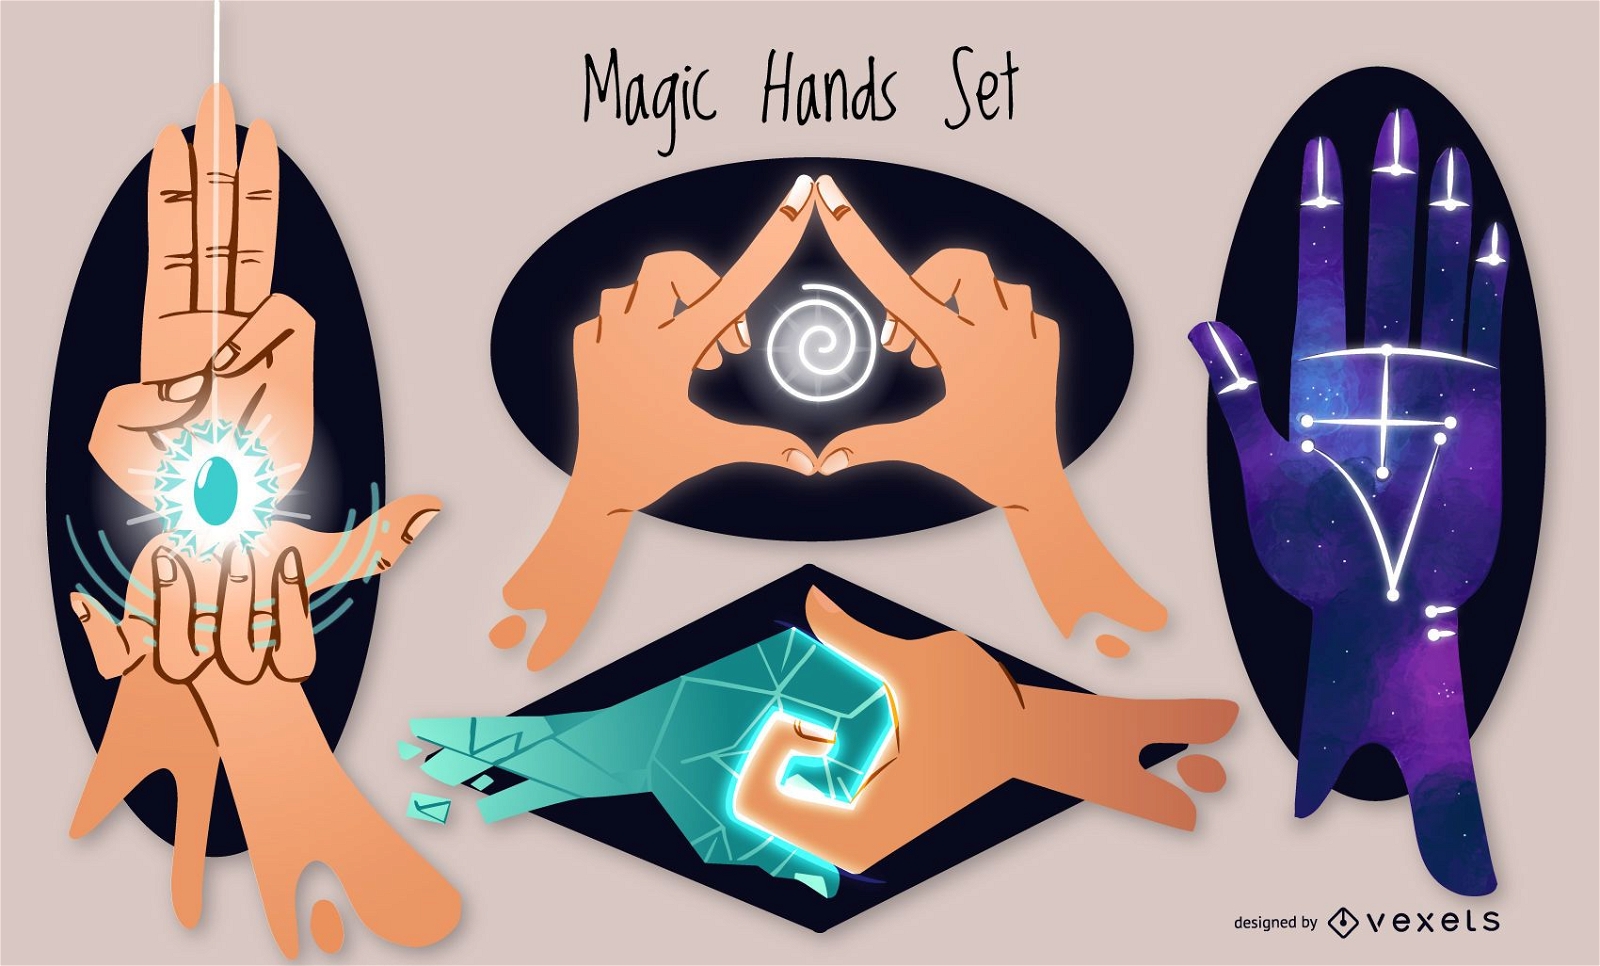 Magic hands illustration set